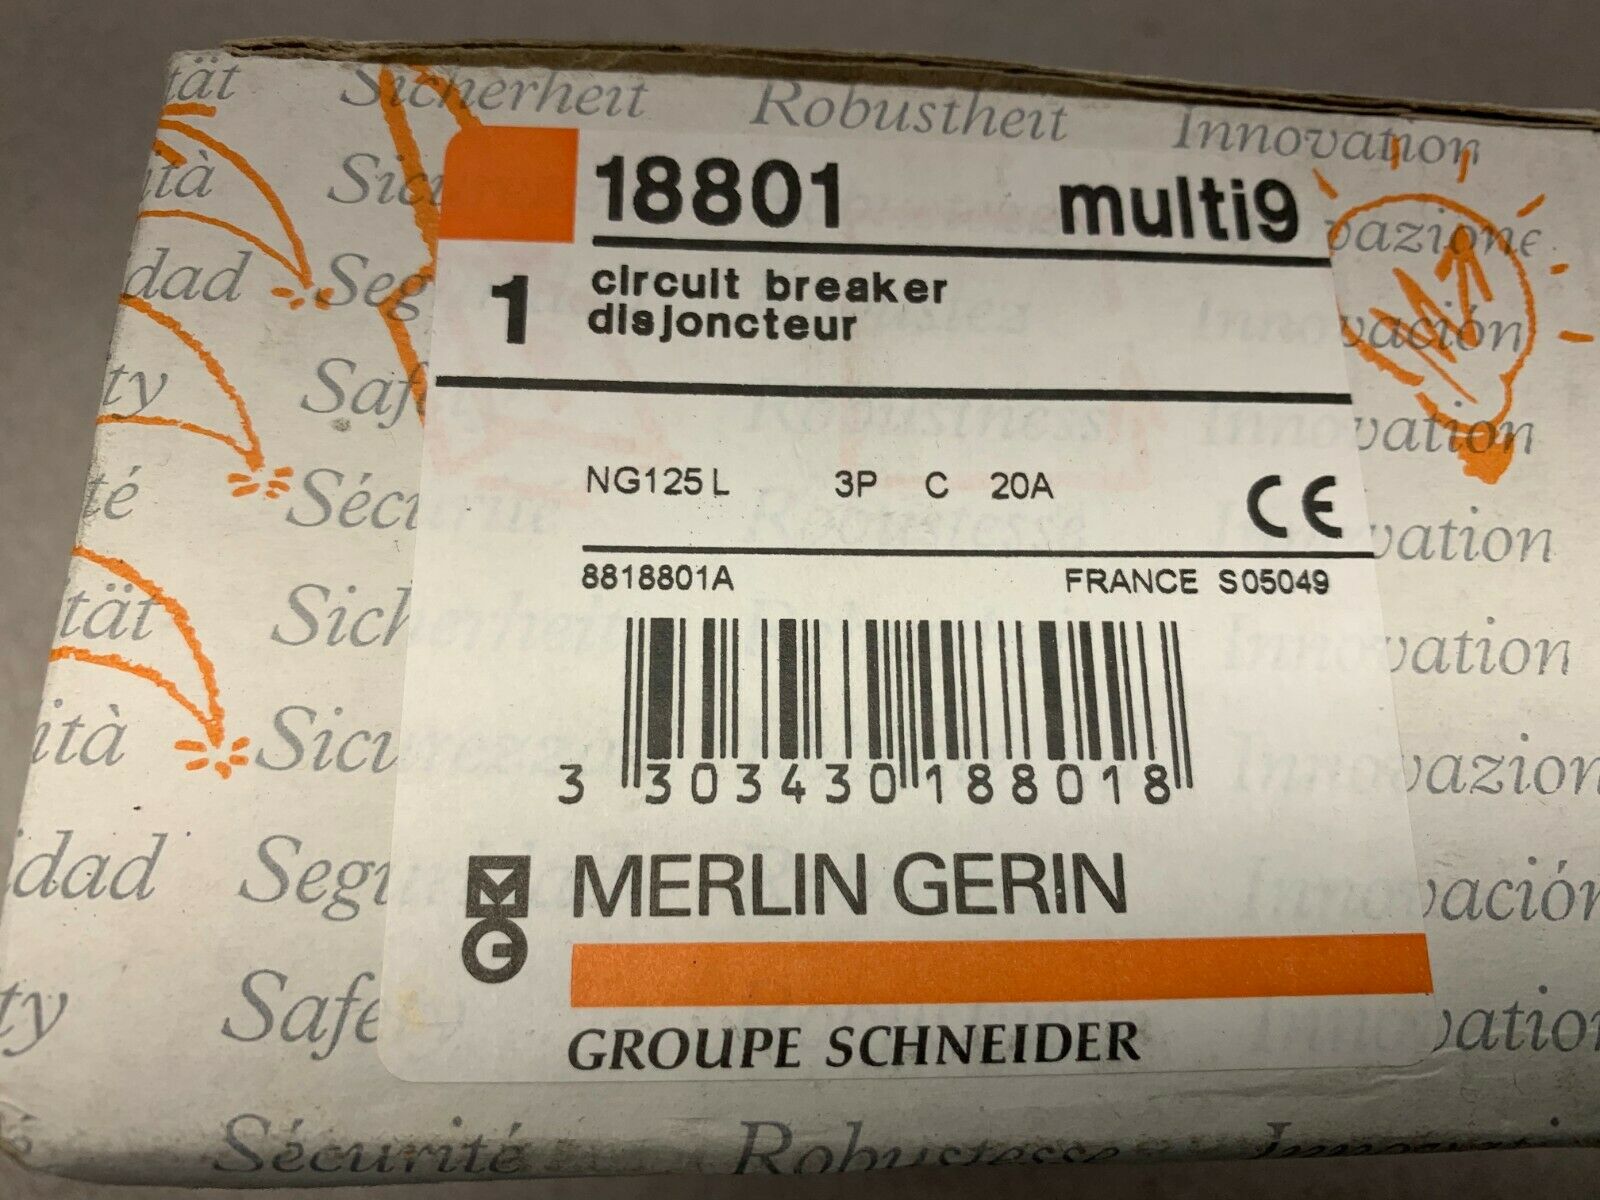 NEW IN BOX MERLIN GERIN CIRCUIT BREAKER 18801